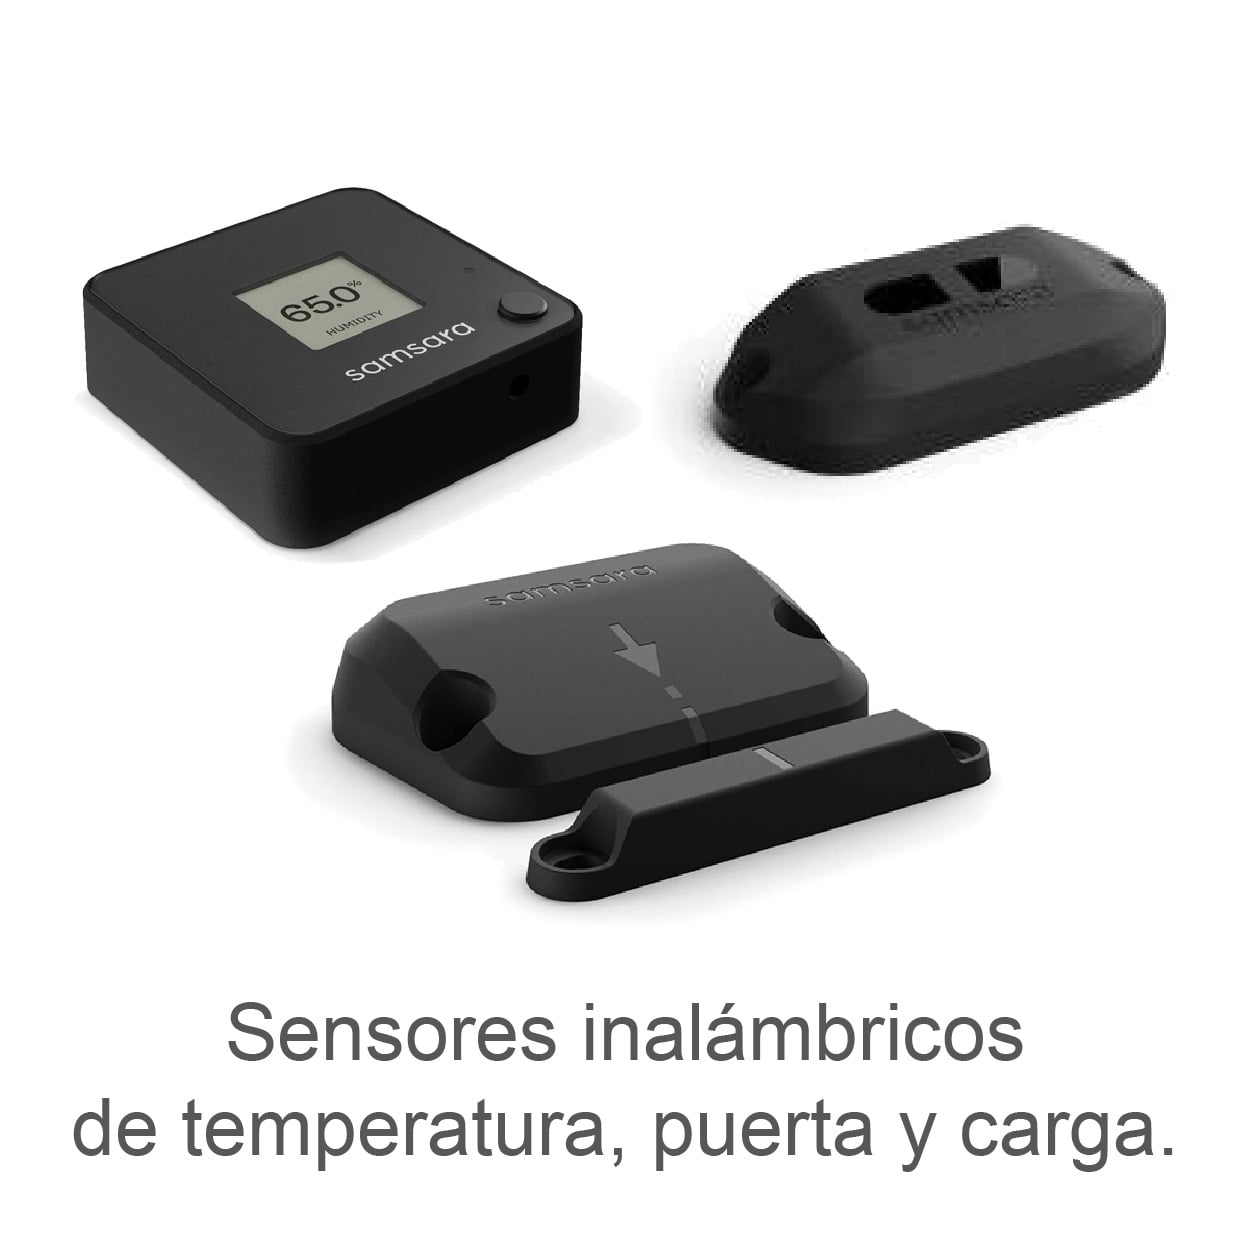 Sensores inalambricos